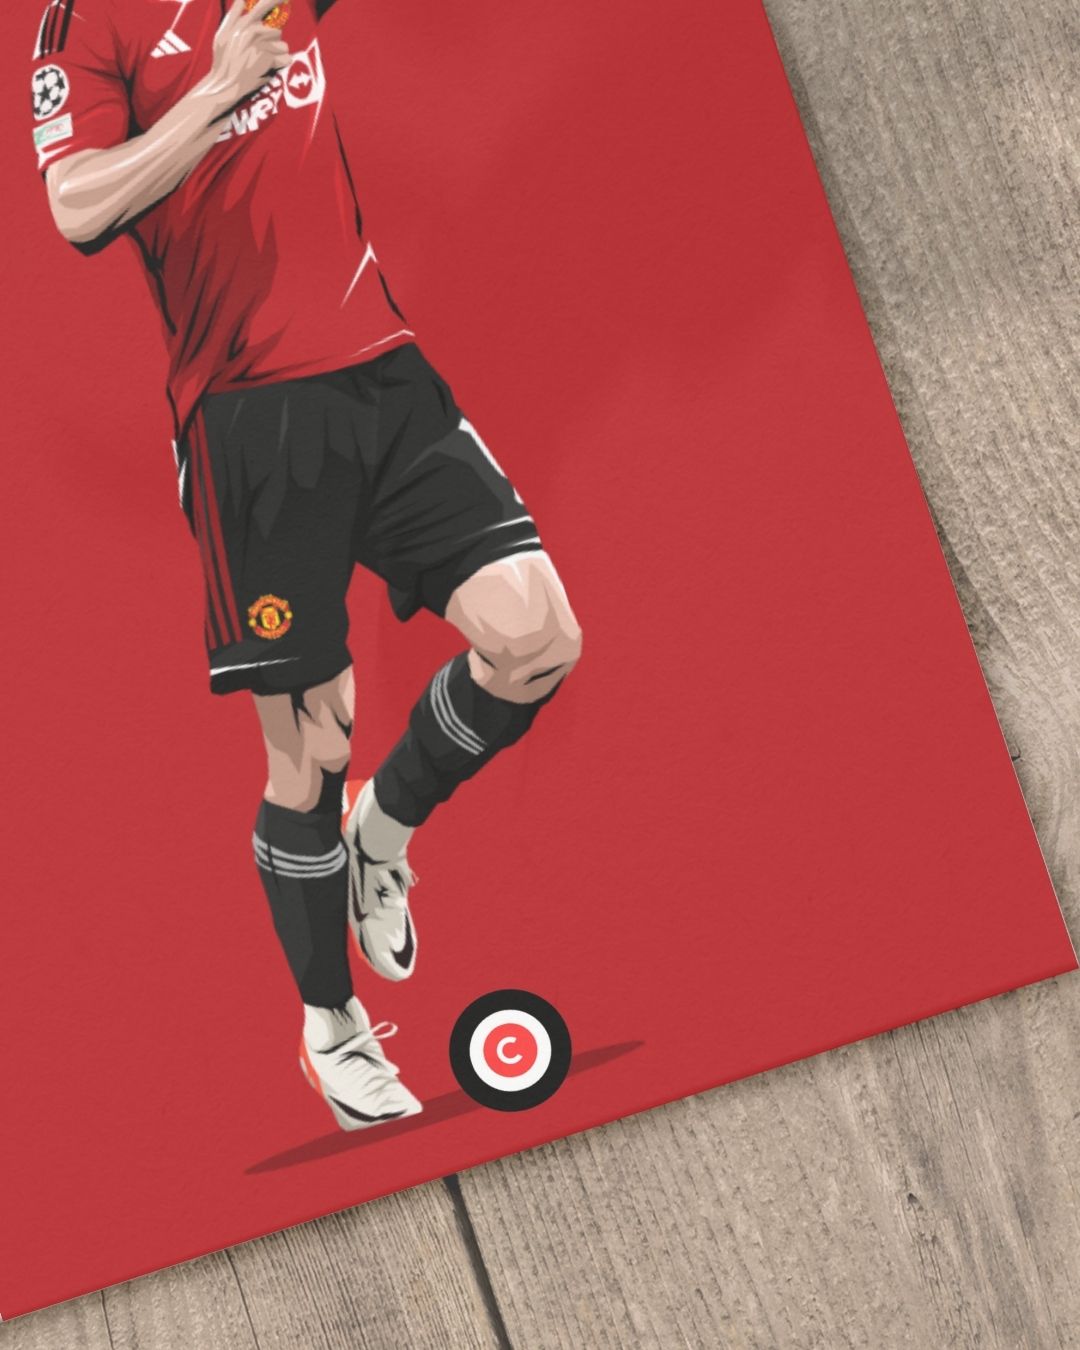 Hojlund "Goal Machine" Print- Manchester United - Premium  from CatenaccioDesigns - Just €14.50! Shop now at CatenaccioDesigns